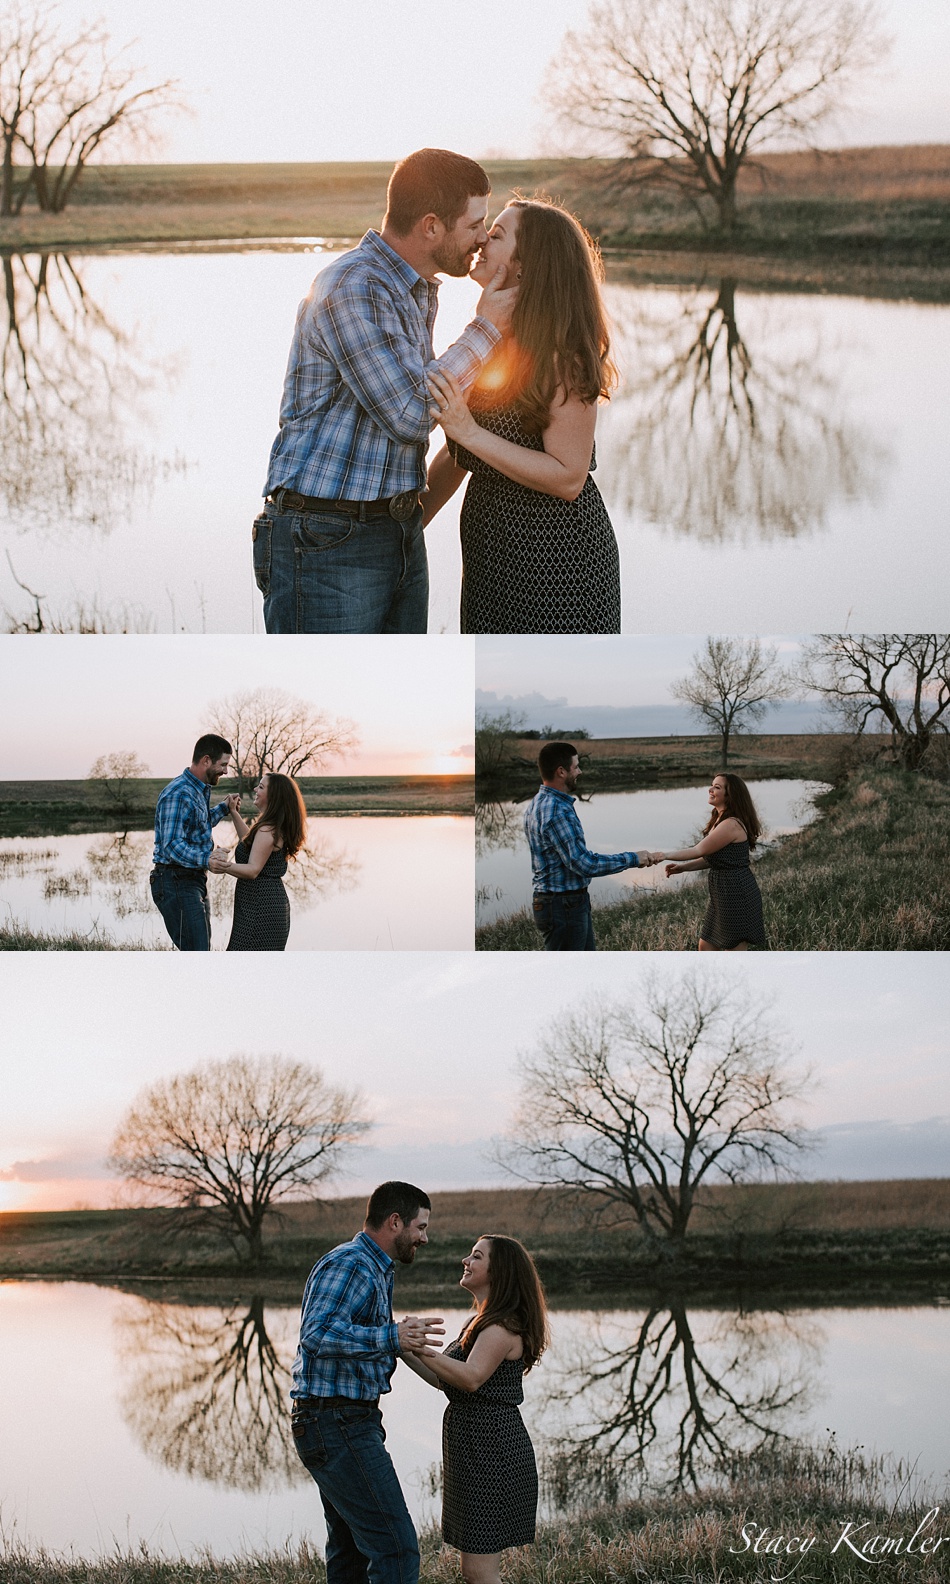 Nebraska sunset with engagement photos